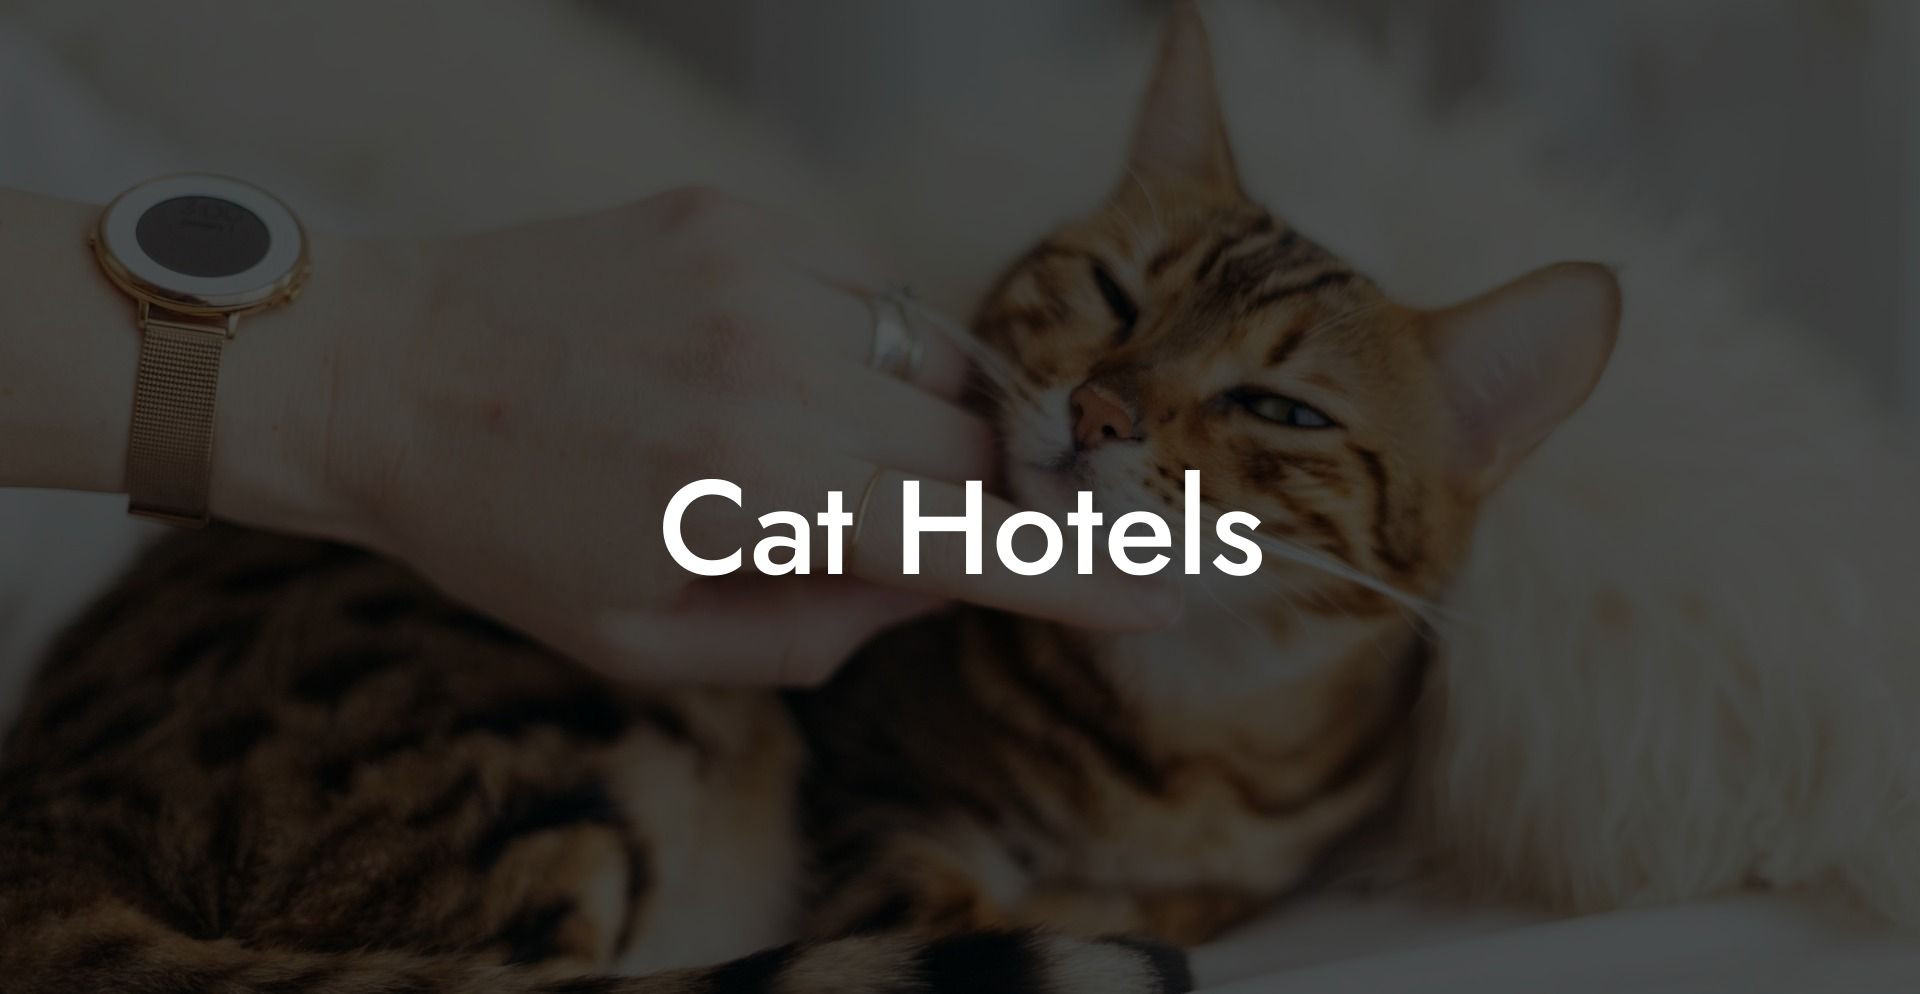 Cat Hotels